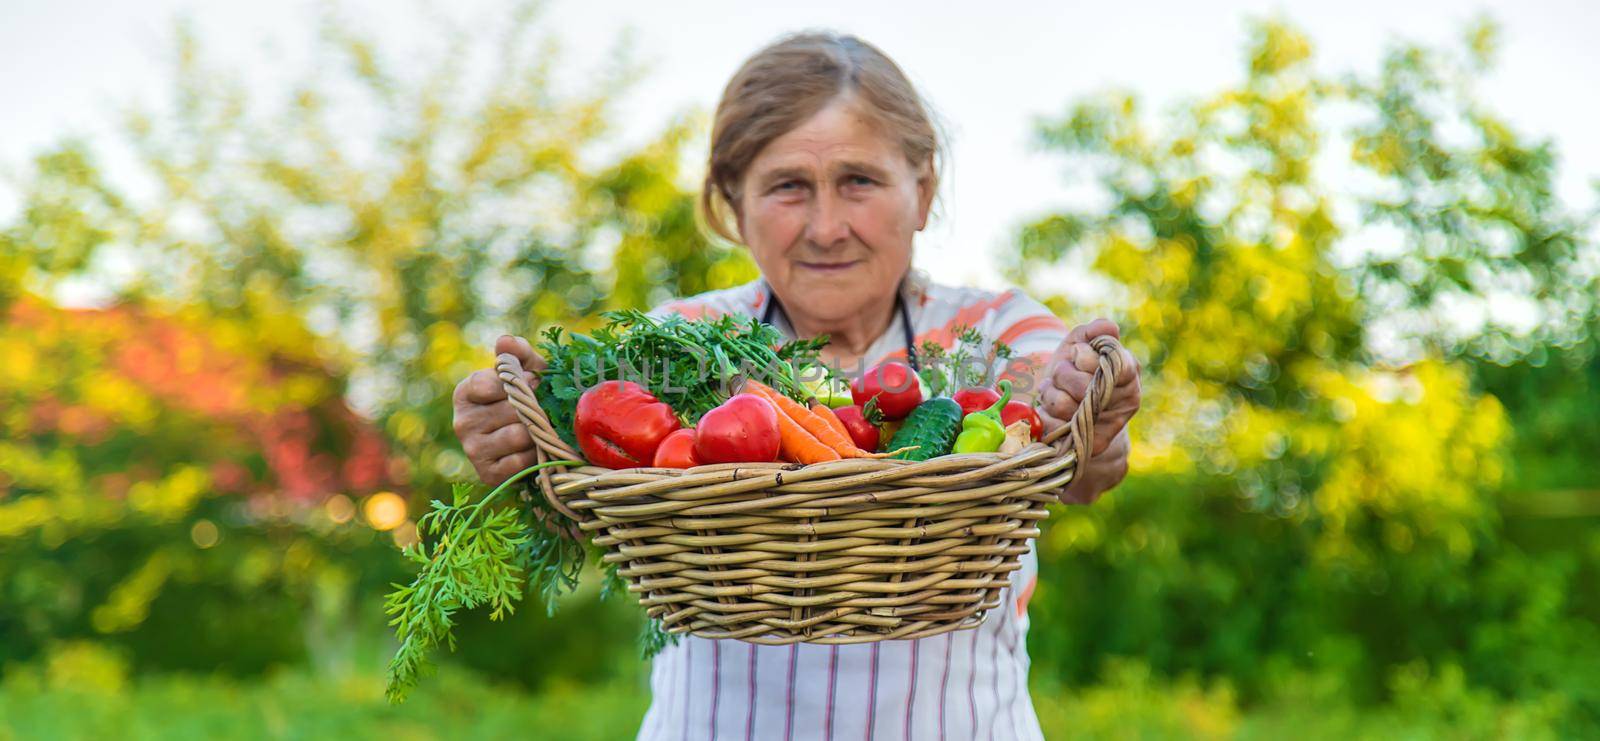 Senior woman harvesting vegetables in the garden. Selective focus. by yanadjana